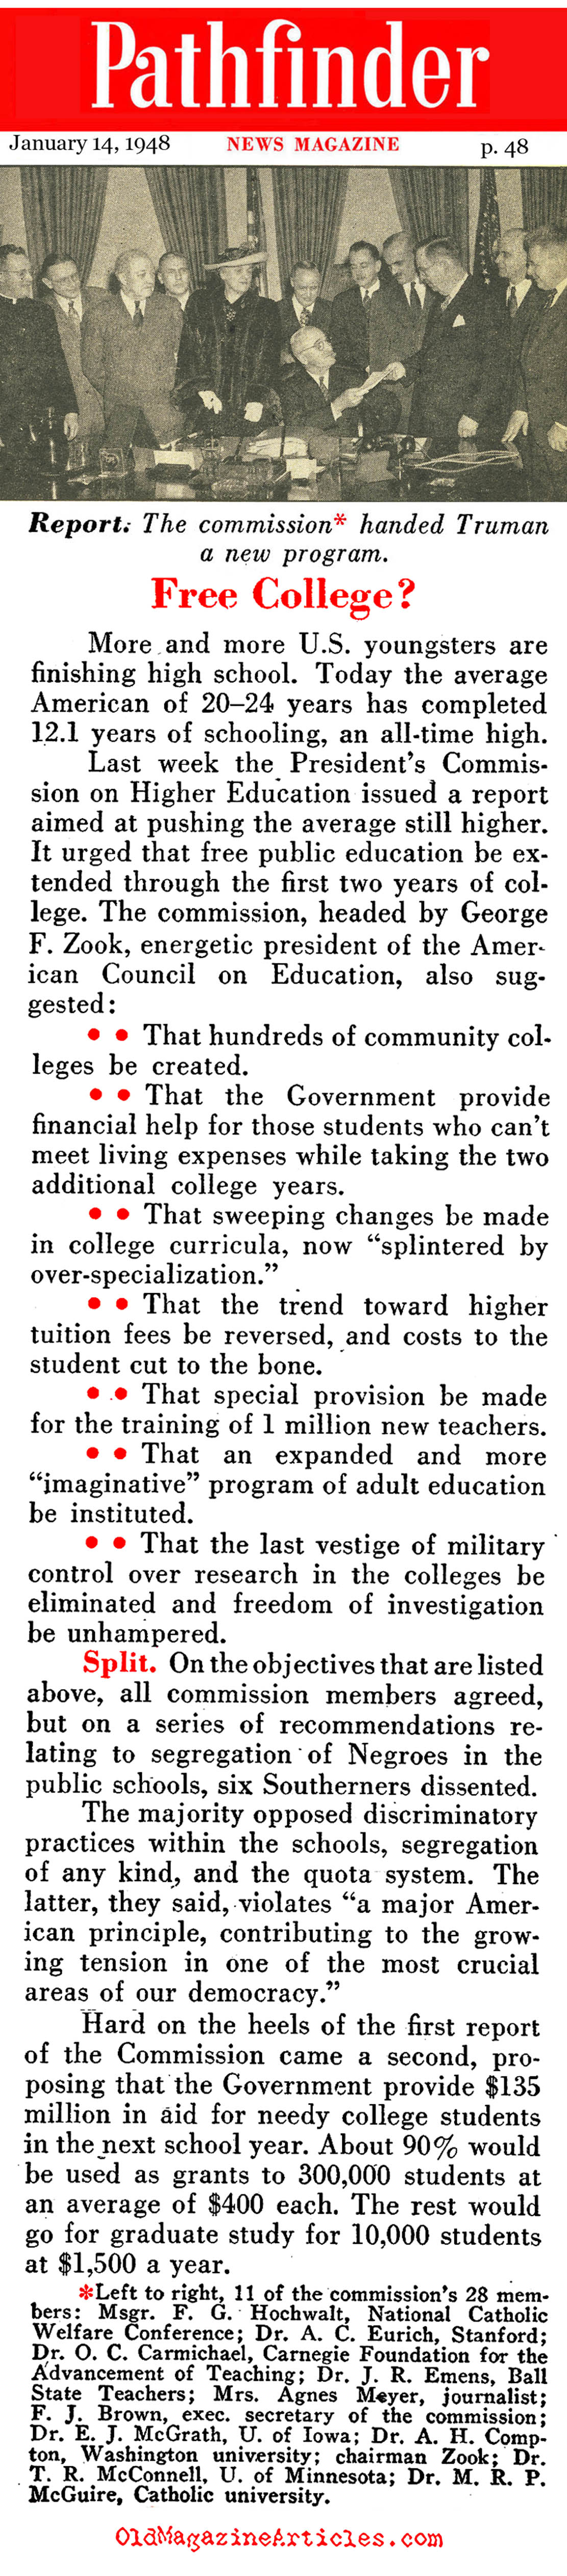 Free College? (Pathfinder Magazine, 1948)